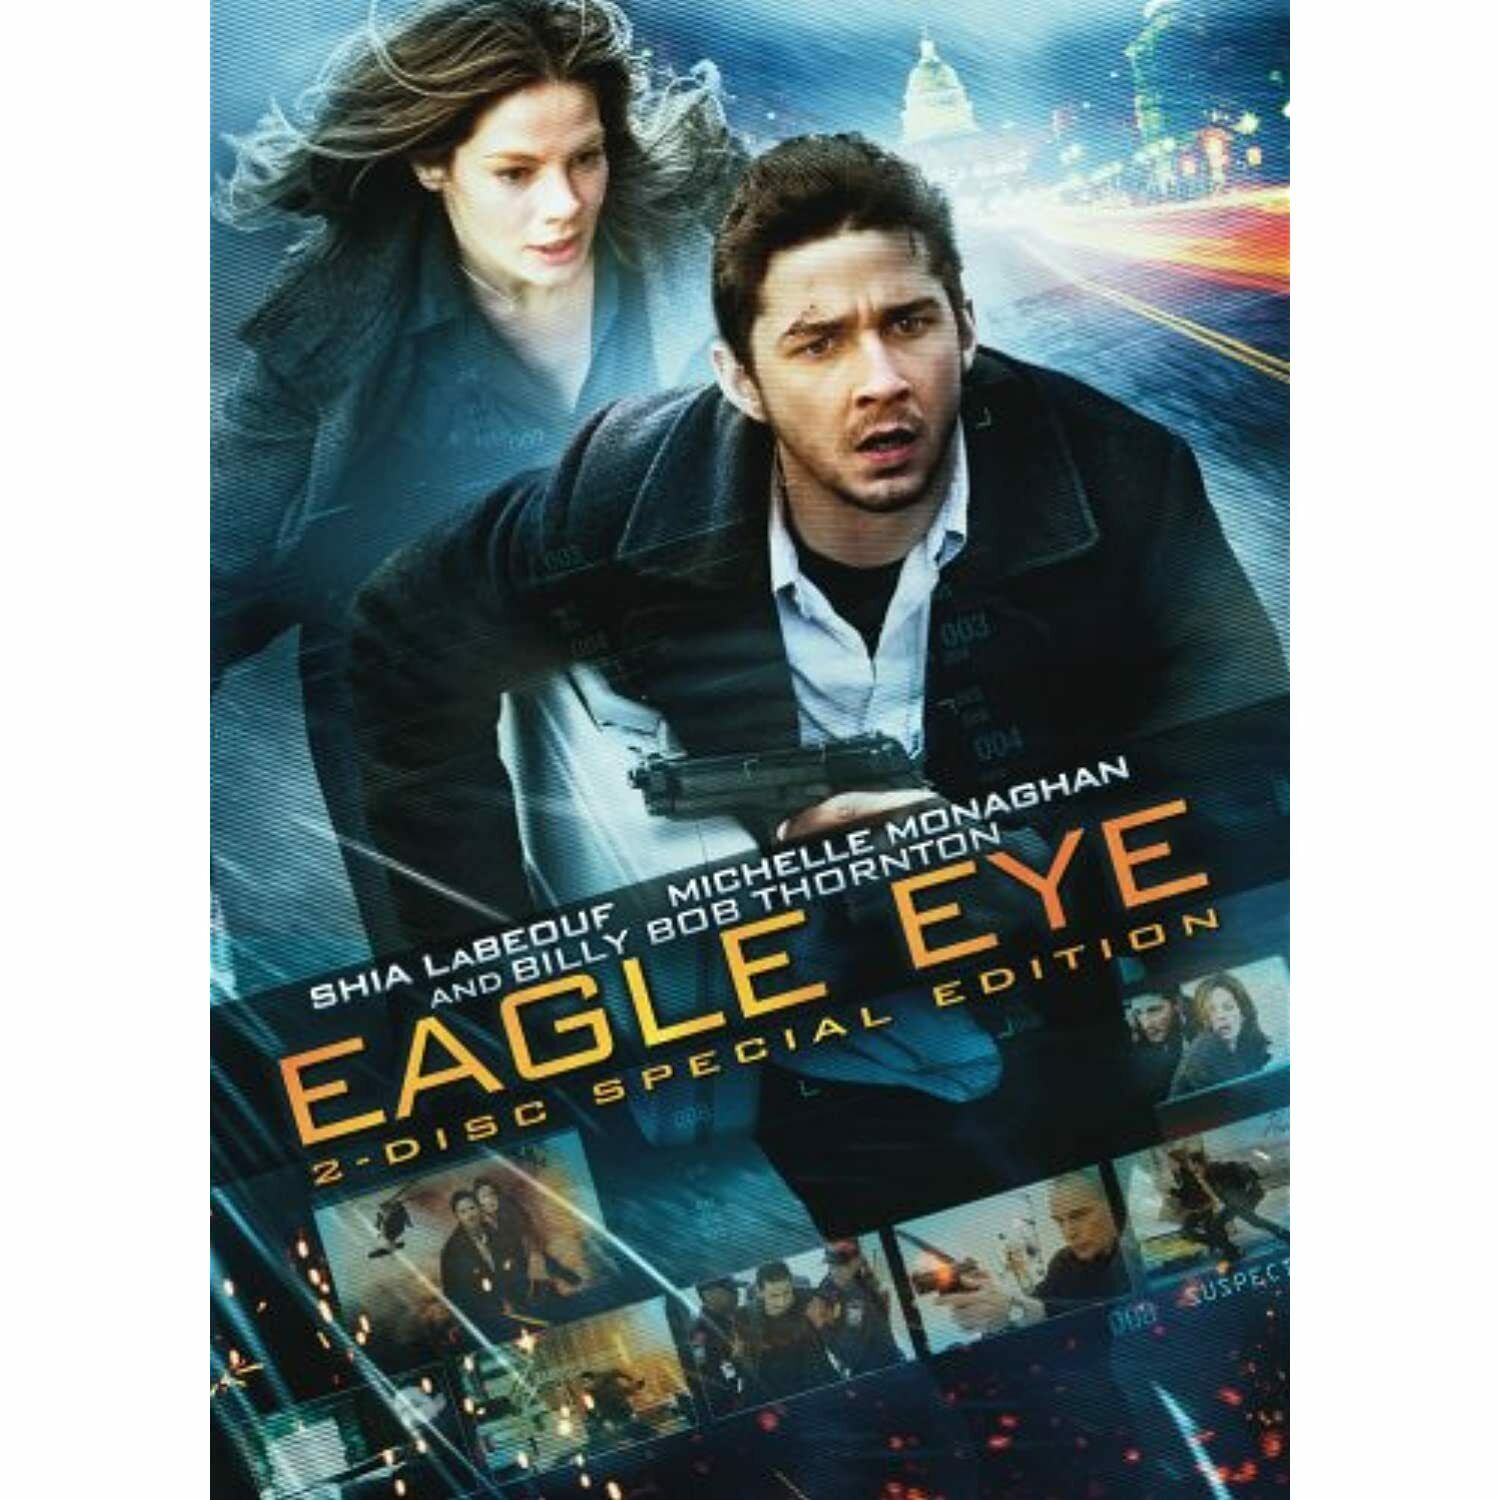 Eagle Eye (DVD, 2 Disc Set, Special Edition Sensormatic) Online